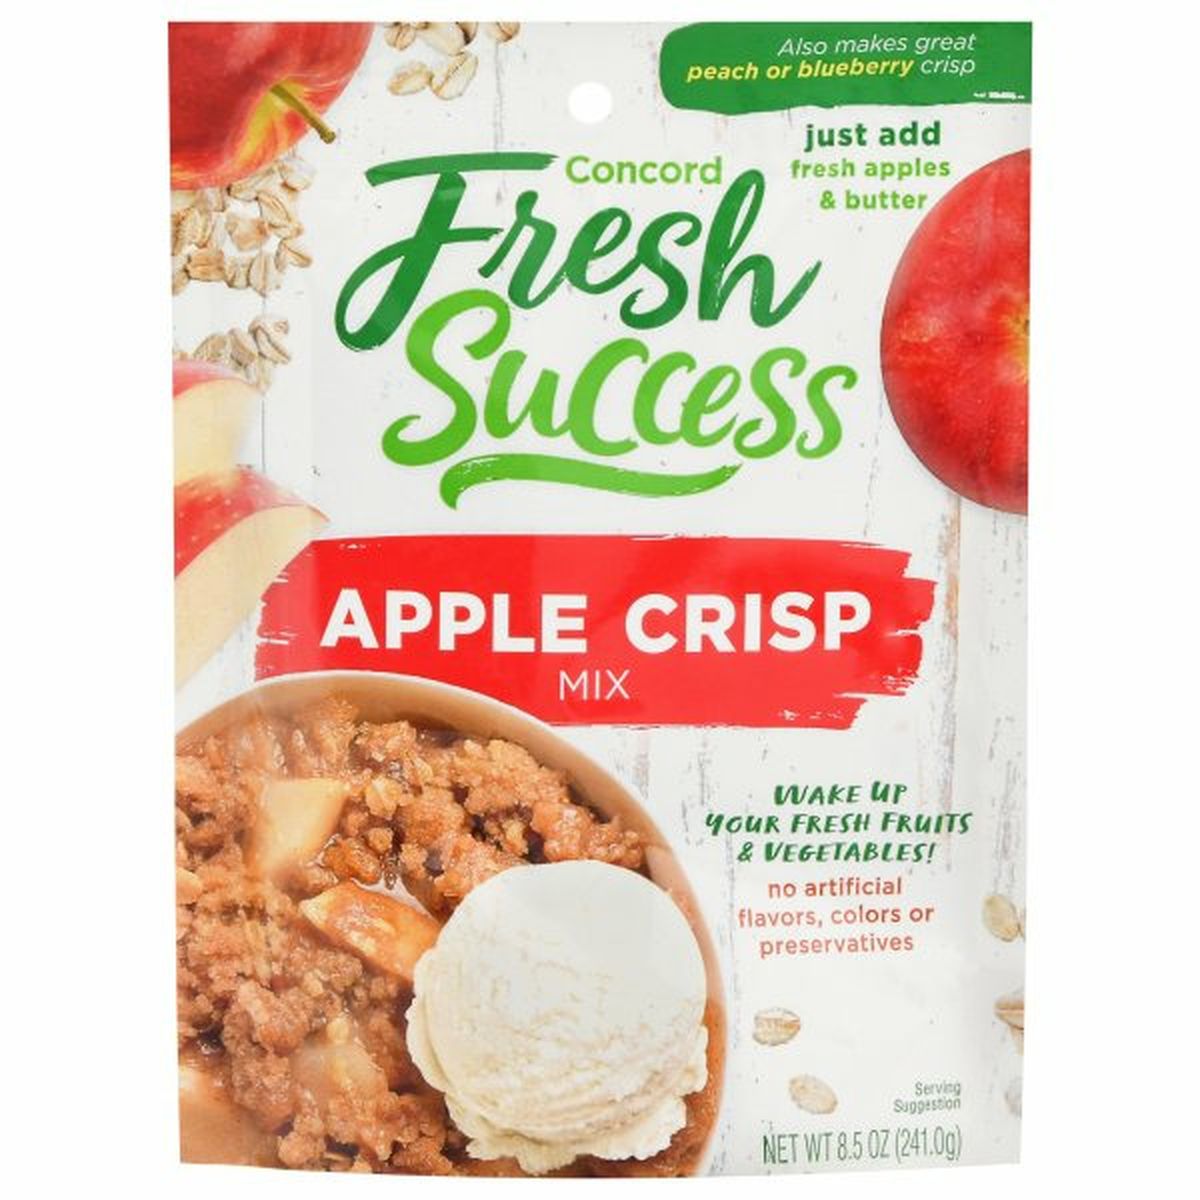 Calories in Concord Foods Fresh Success Apple Crisp Mix